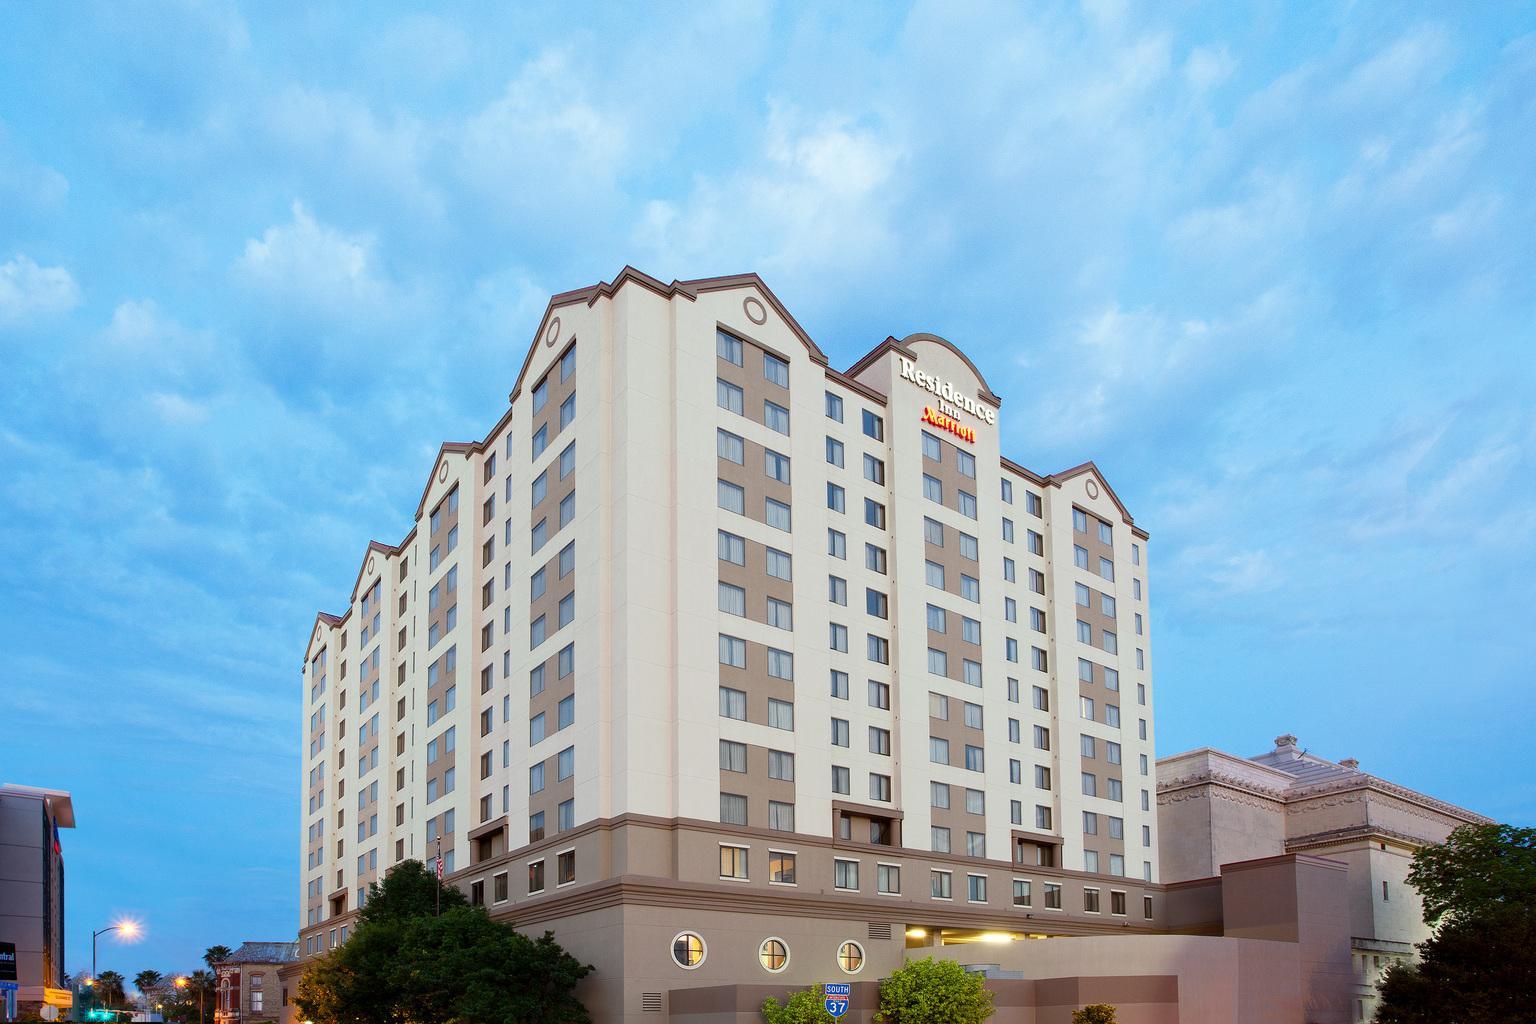 Photo of Residence Inn by Marriott San Antonio Downtown/Alamo Plaza, San Antonio, TX